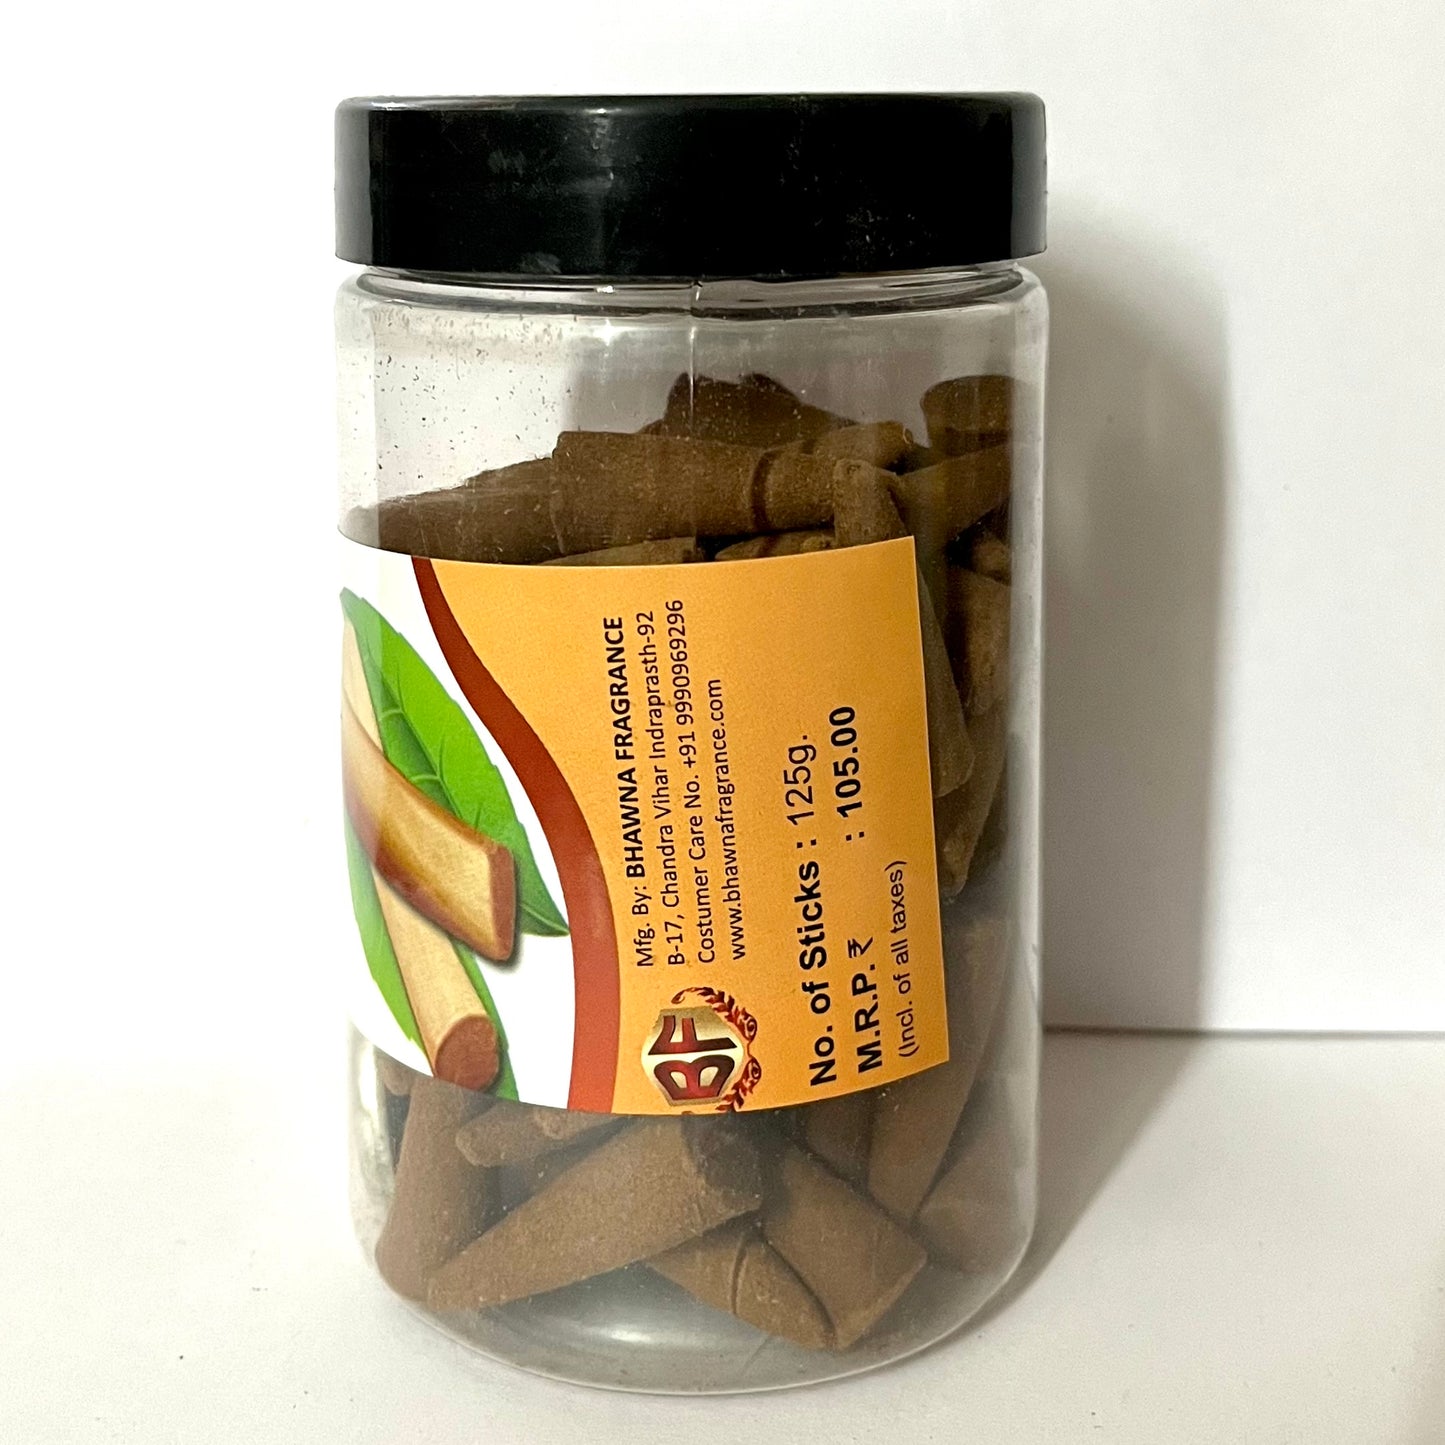 Bhawna Sugandh SANDAL Incense Cones Jar (125 gms)